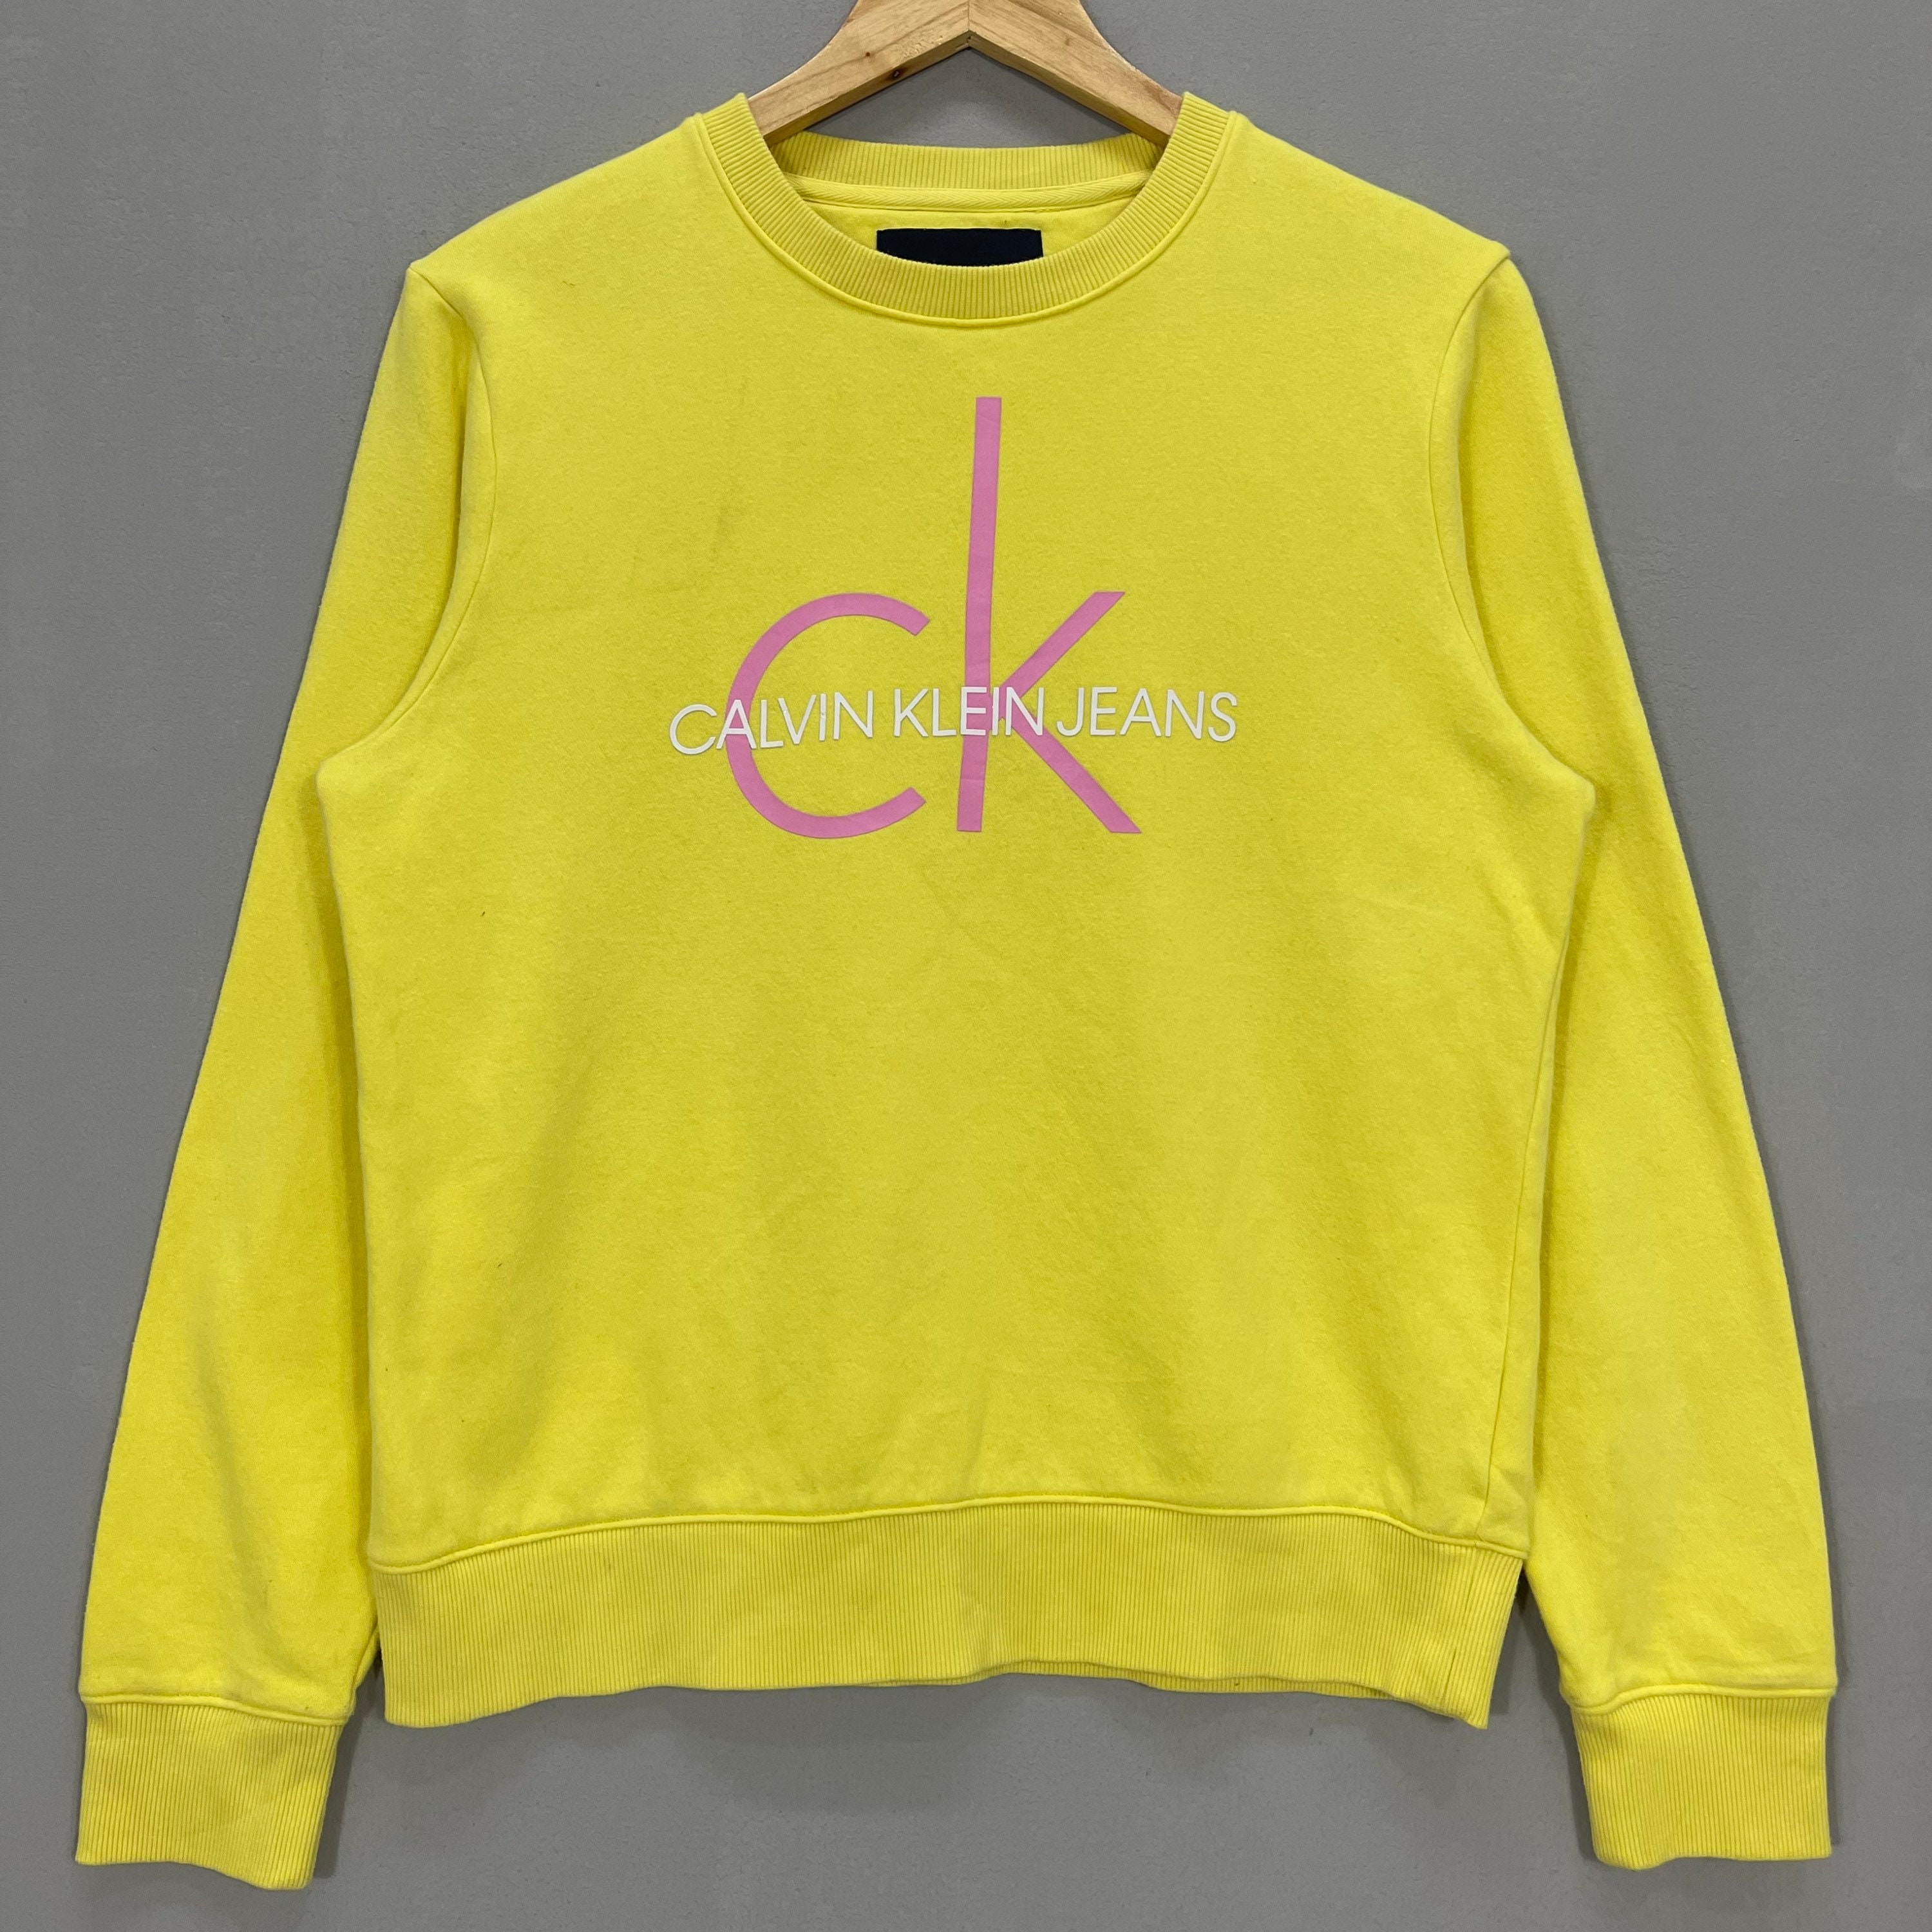 Calvin Klein Jeans Sweatshirt Yellow Color Size M Calvin Klein - Etsy Sweden